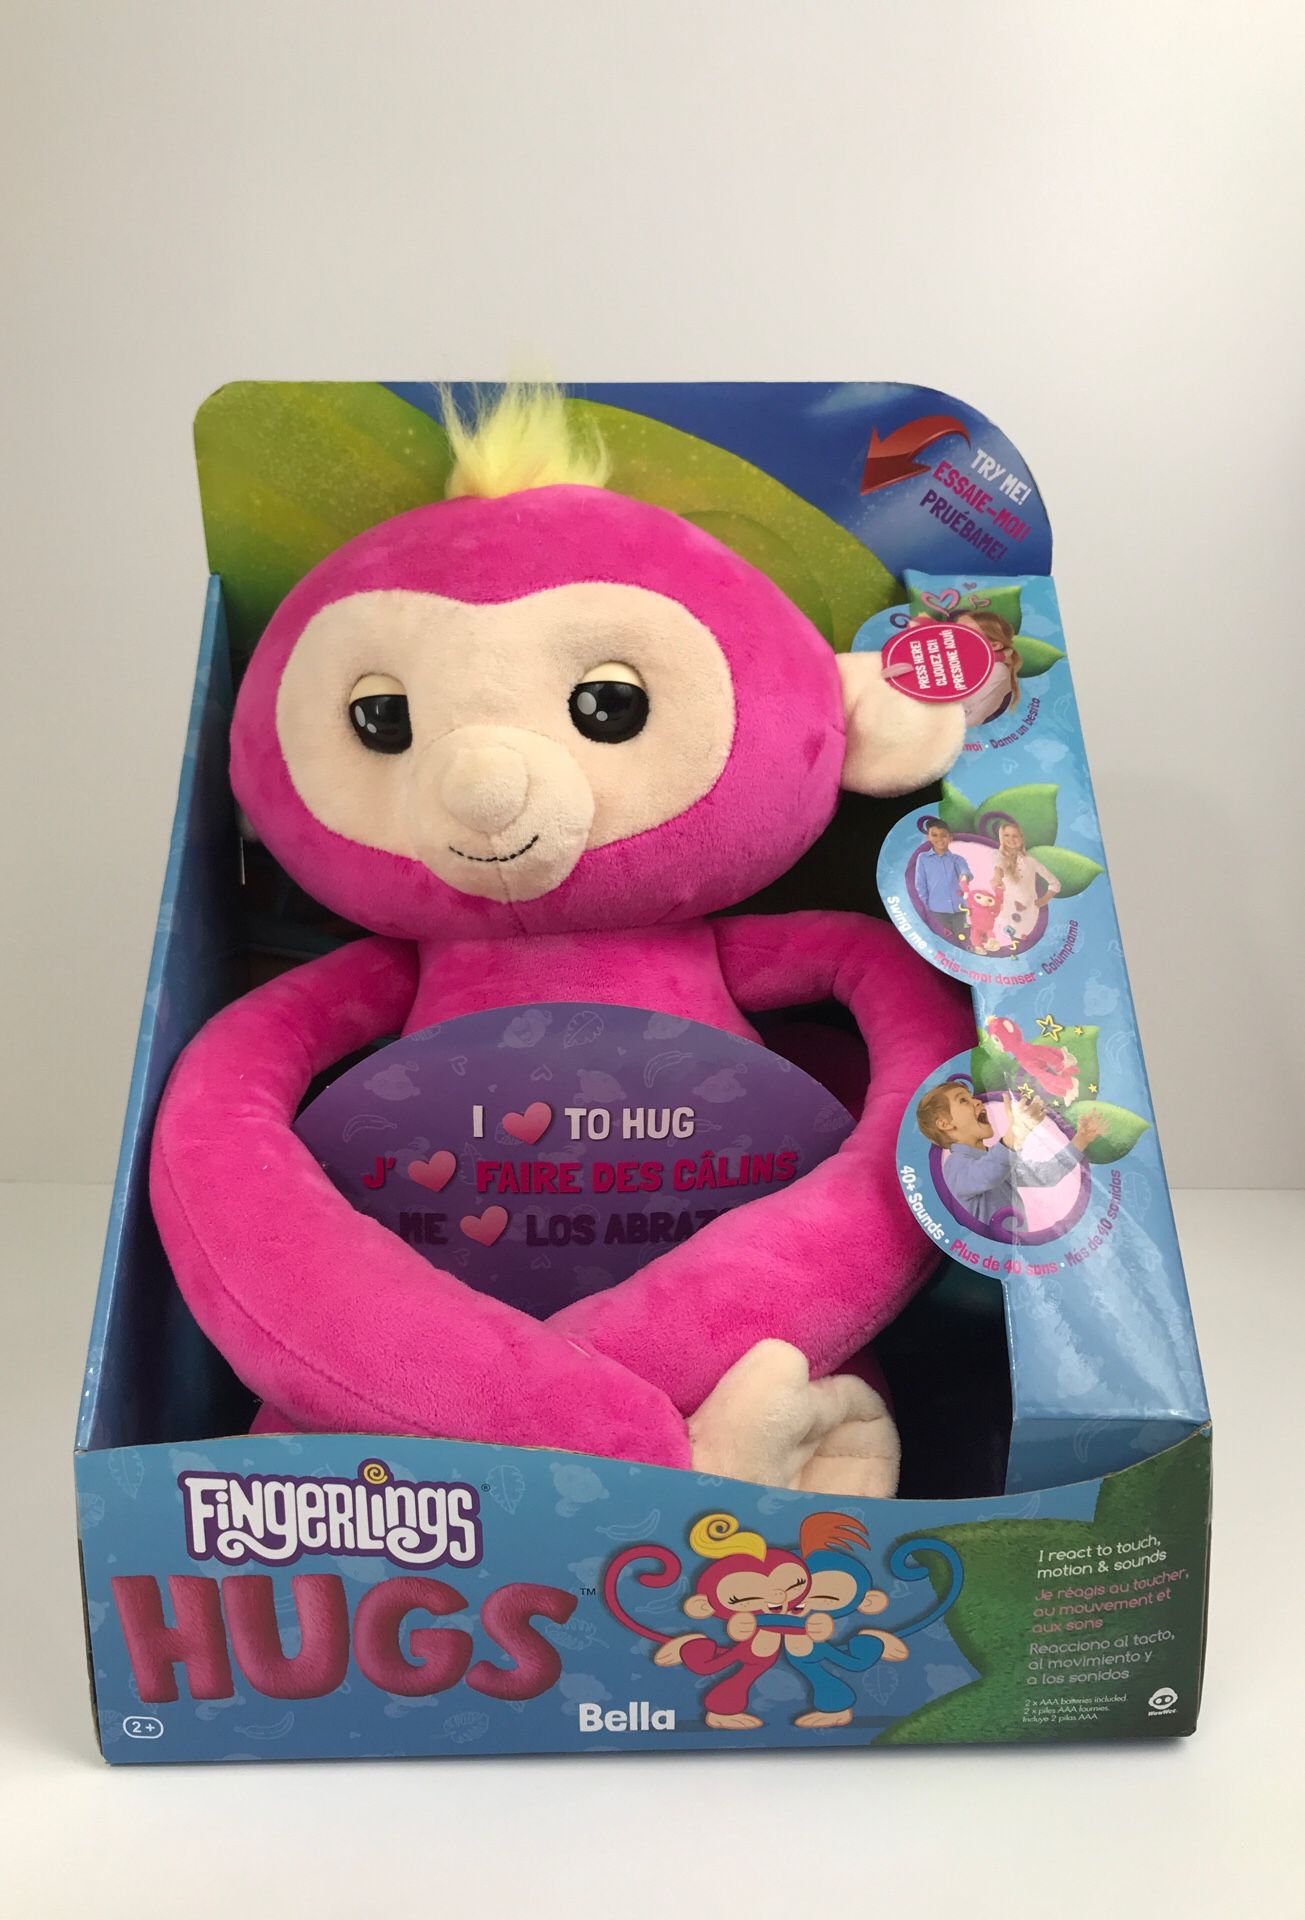 Brand new Fingerlings Hugs Bella Pink Monkey plush